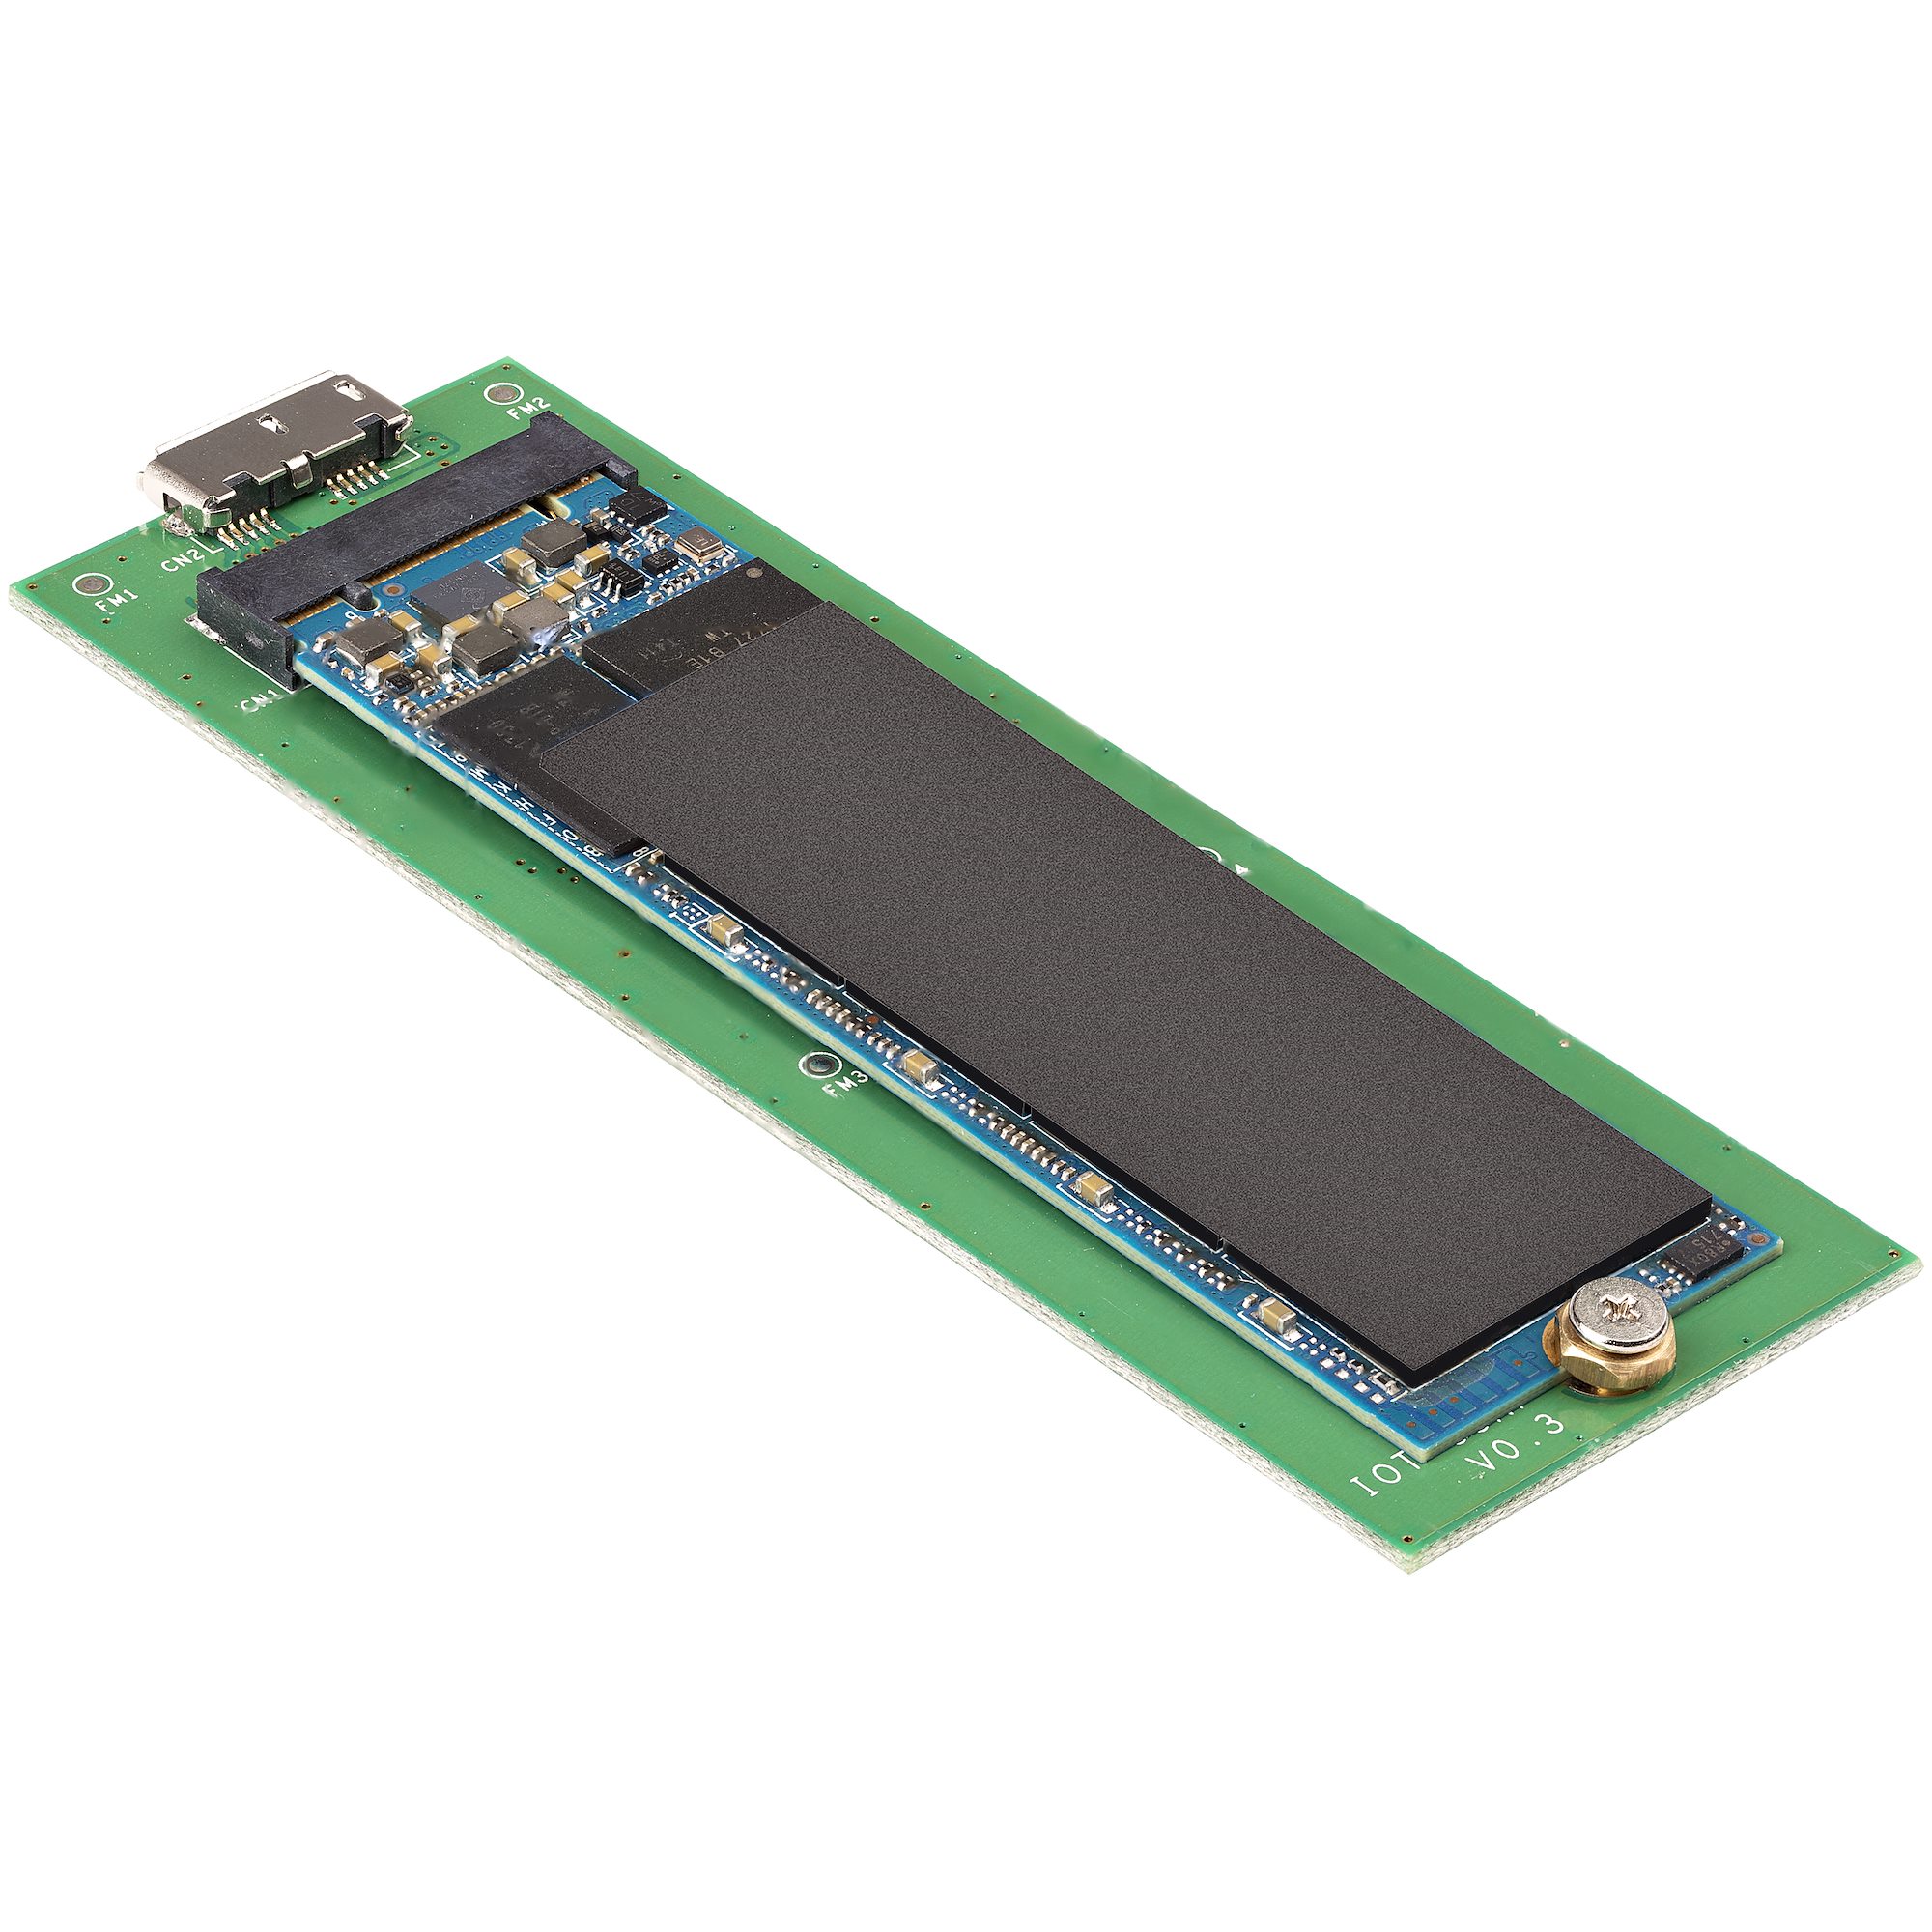 M.2 SSD Enclosure for SATA SSD - USB 3.0 - External Drive